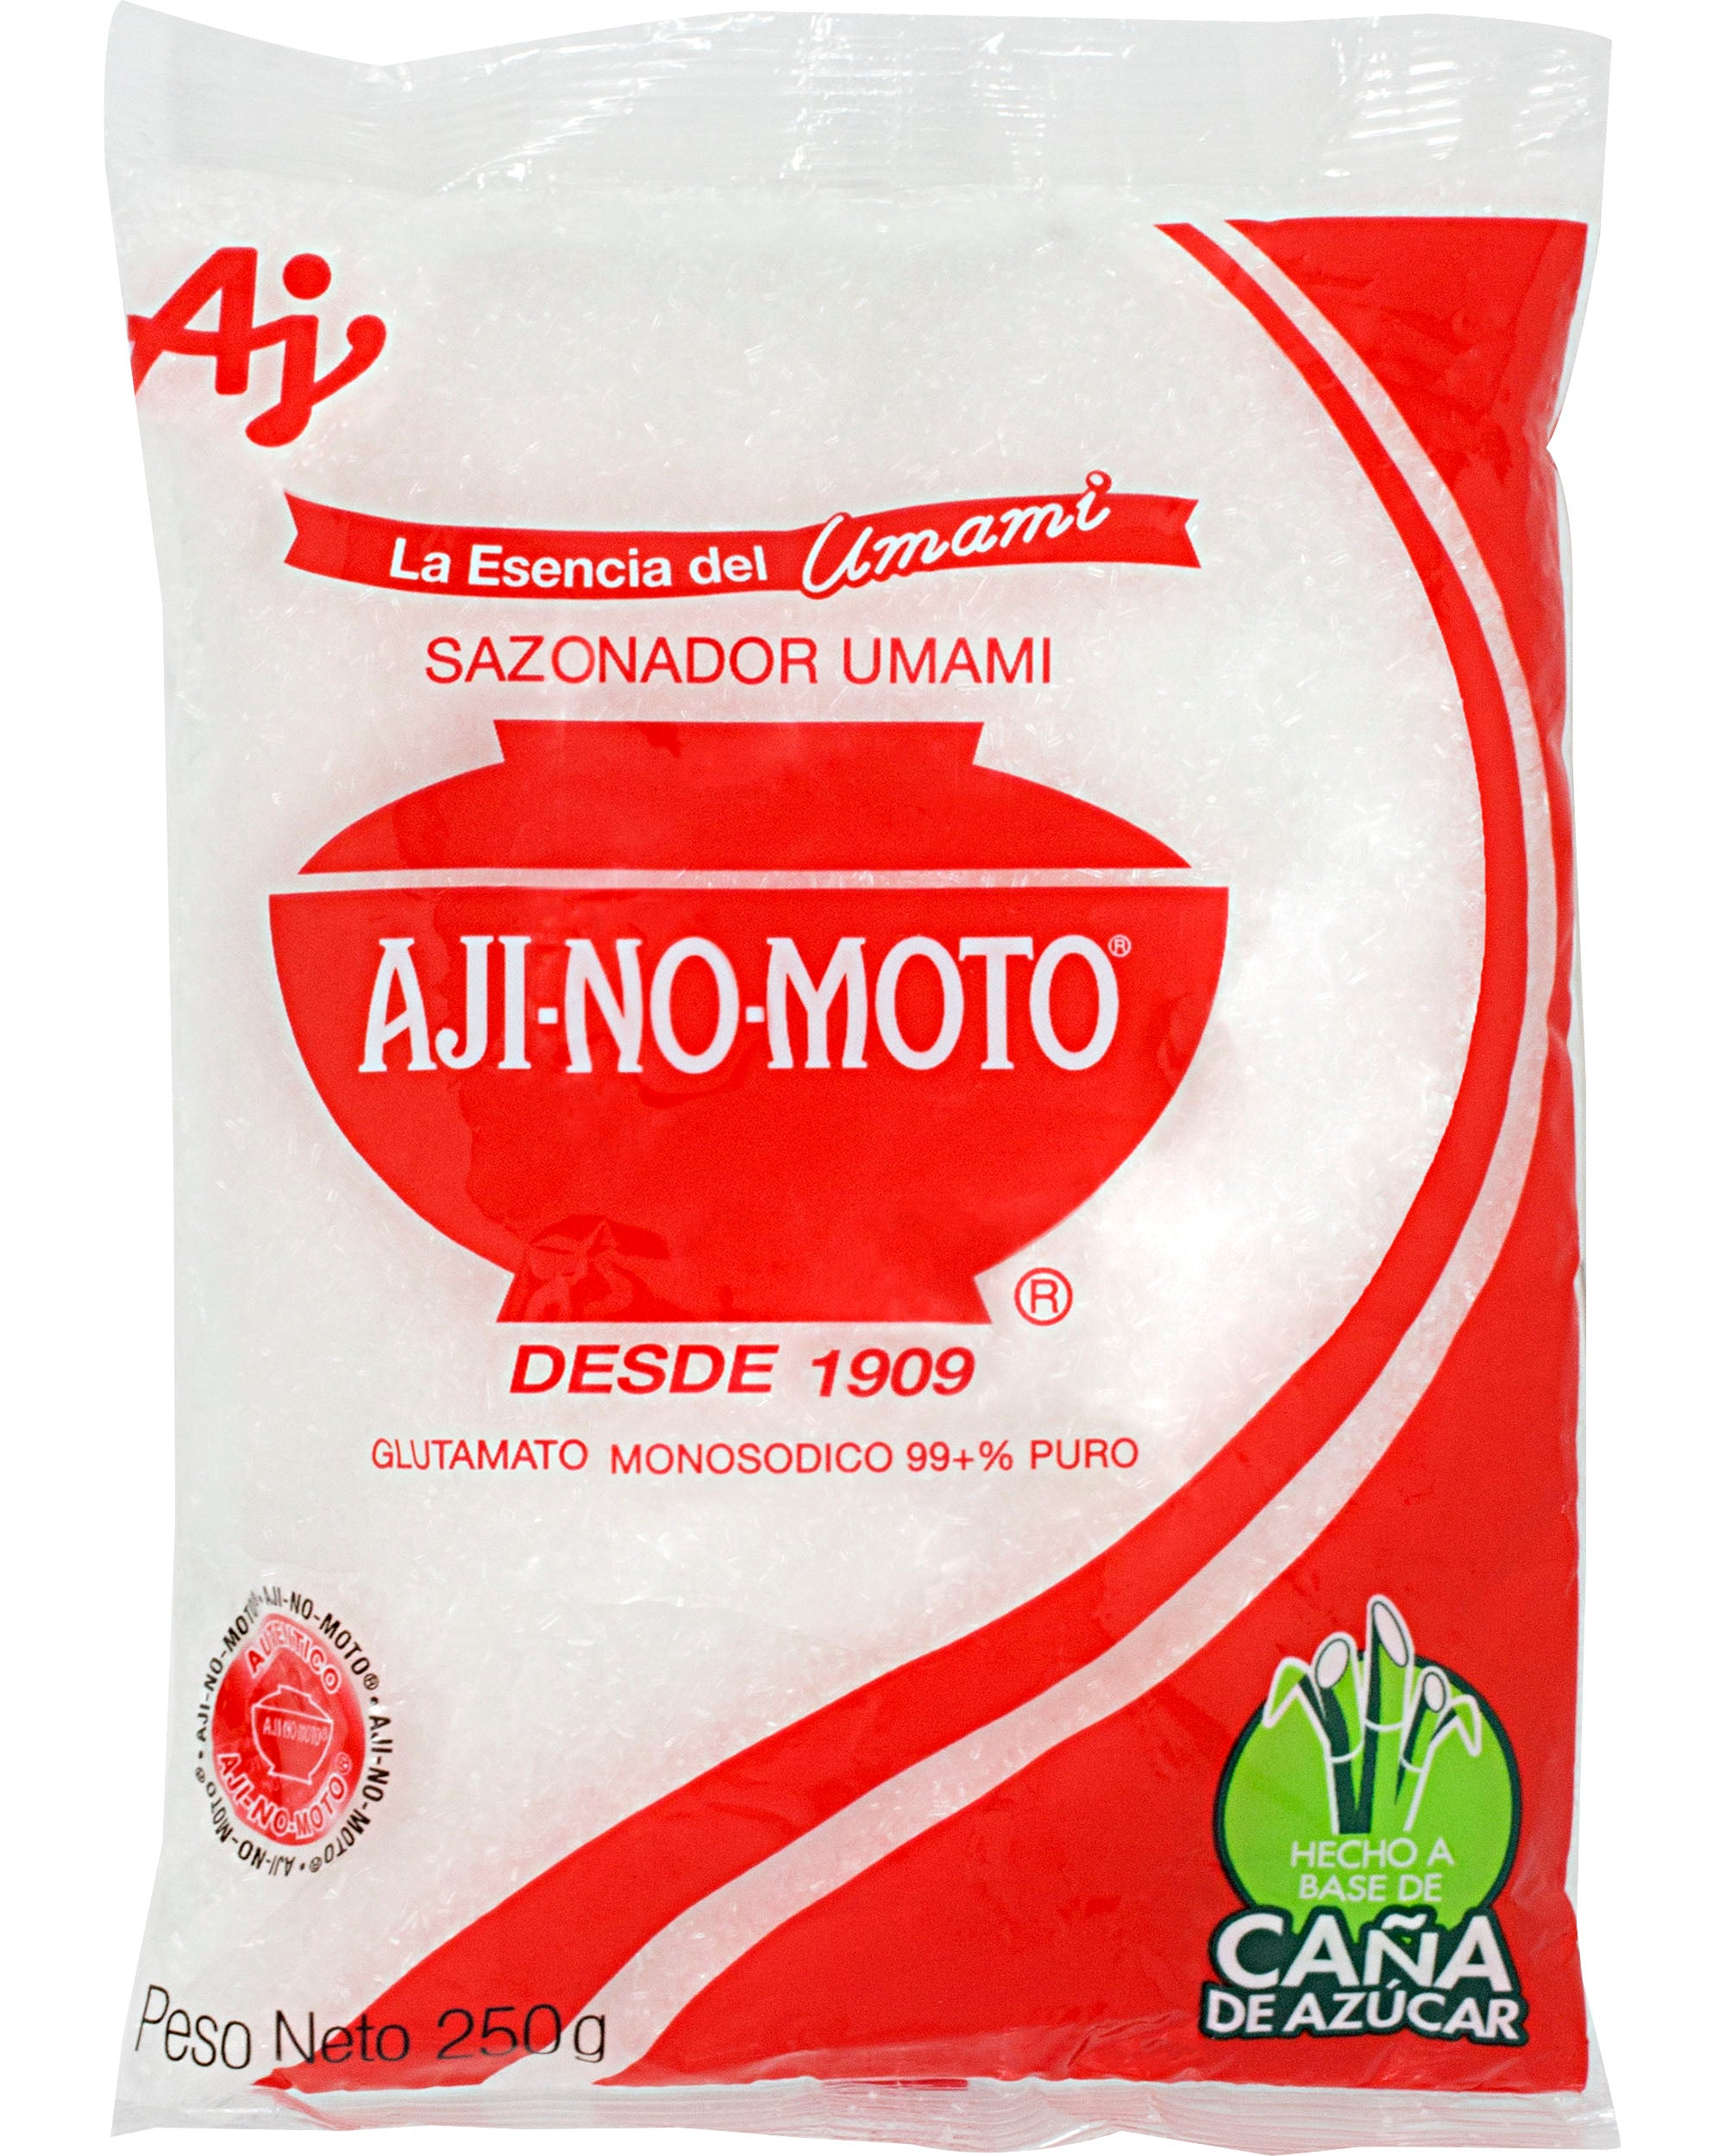 AJI-NO-MOTO® MONOSODIUM GLUTAMATE - Ajinomoto Foods Europe